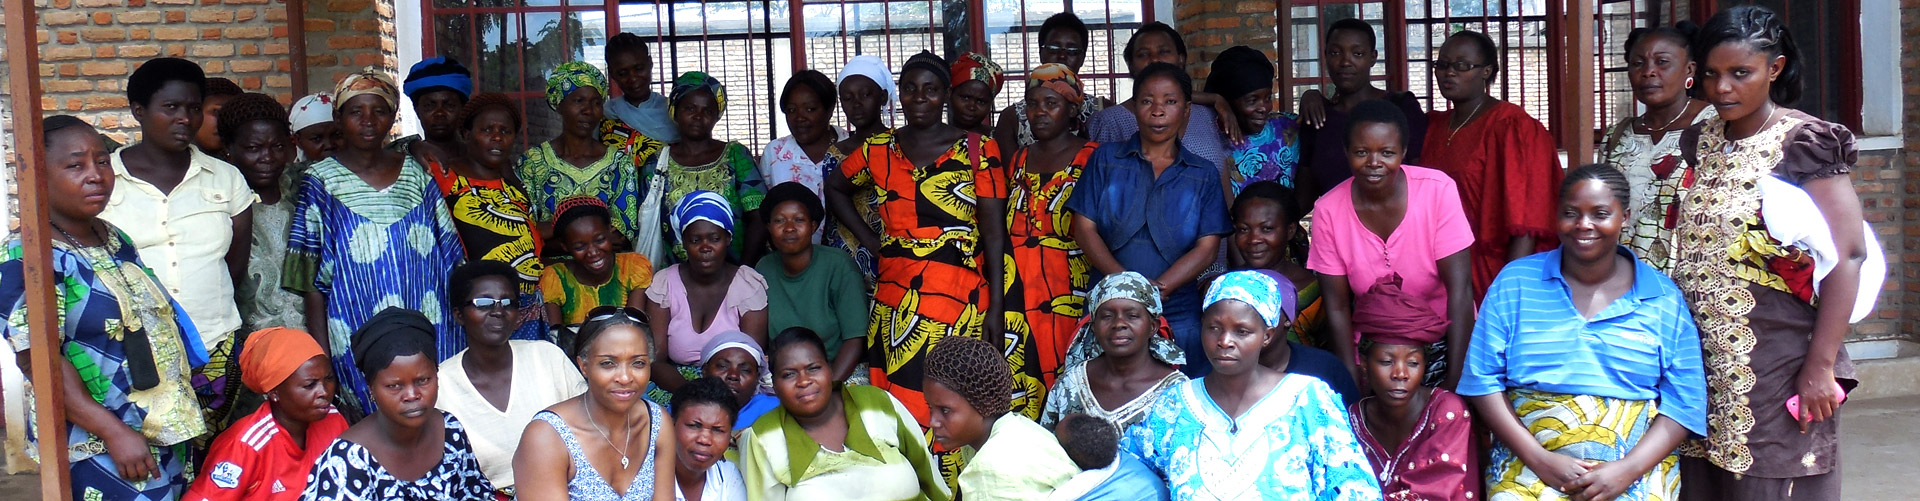 femmes bénéficiares du projet de micro-credits Kira-Ukize